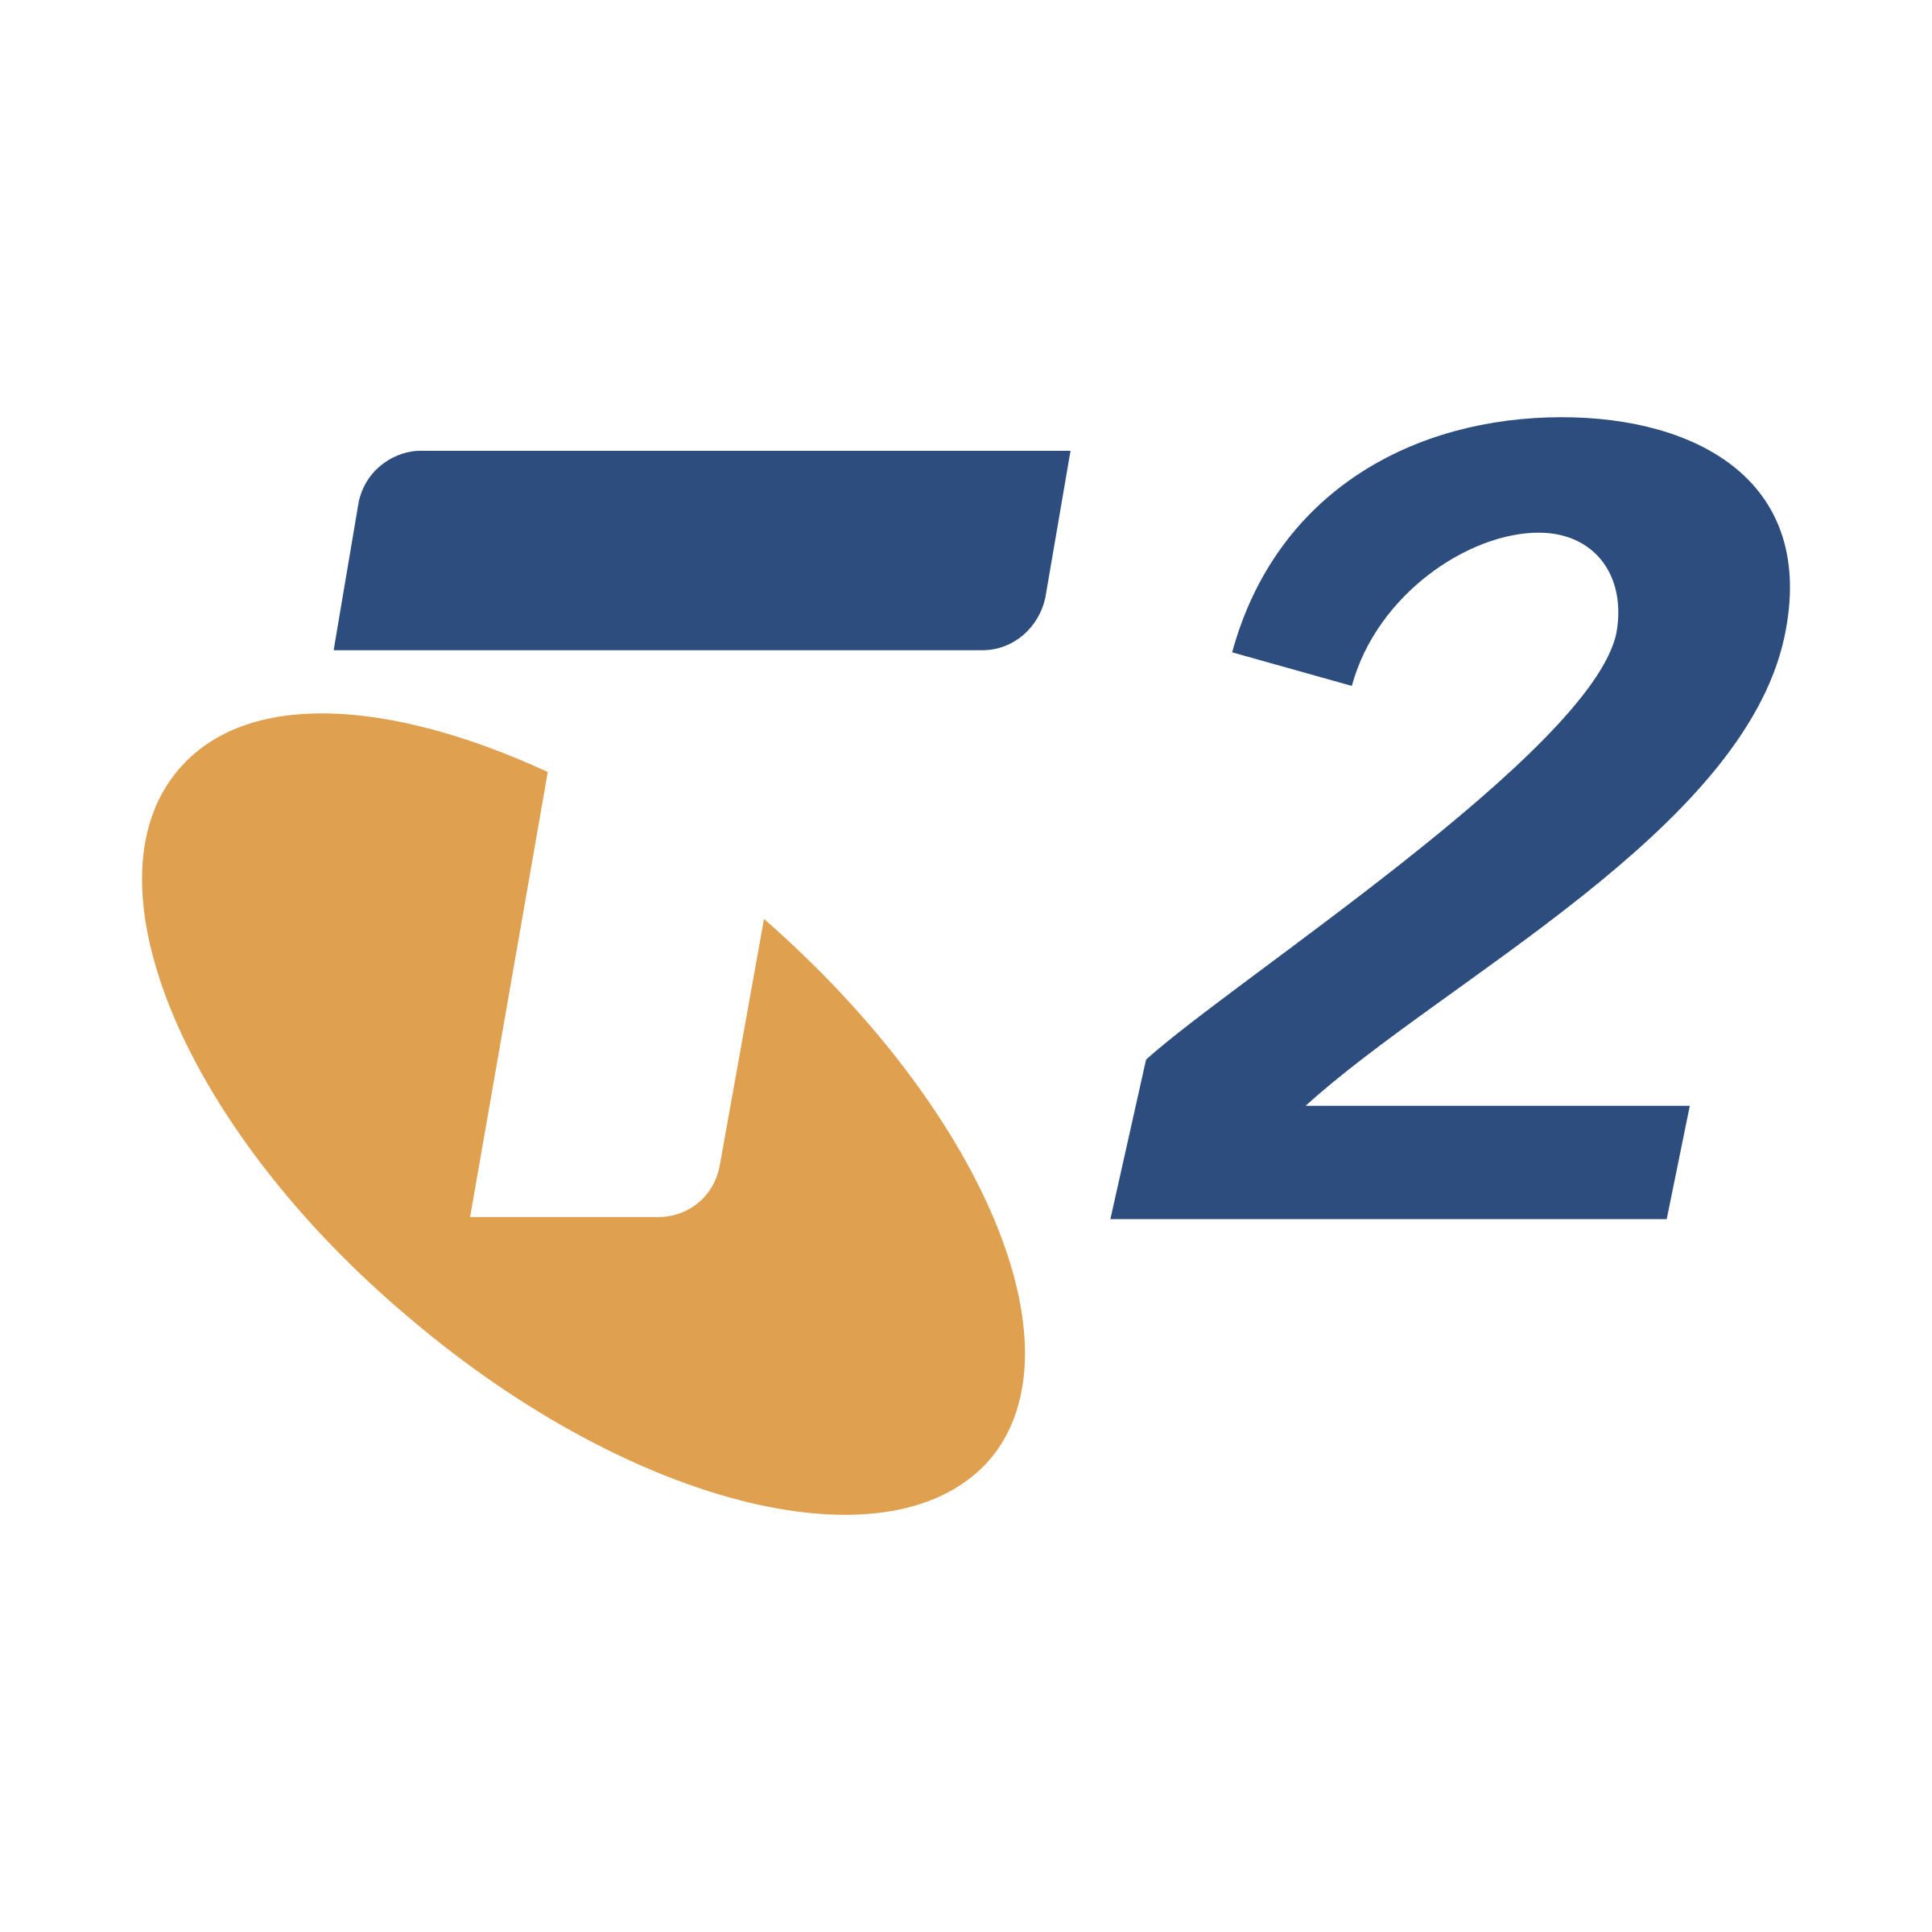 T2 Logo - T2 Logo PNG Transparent & SVG Vector - Freebie Supply